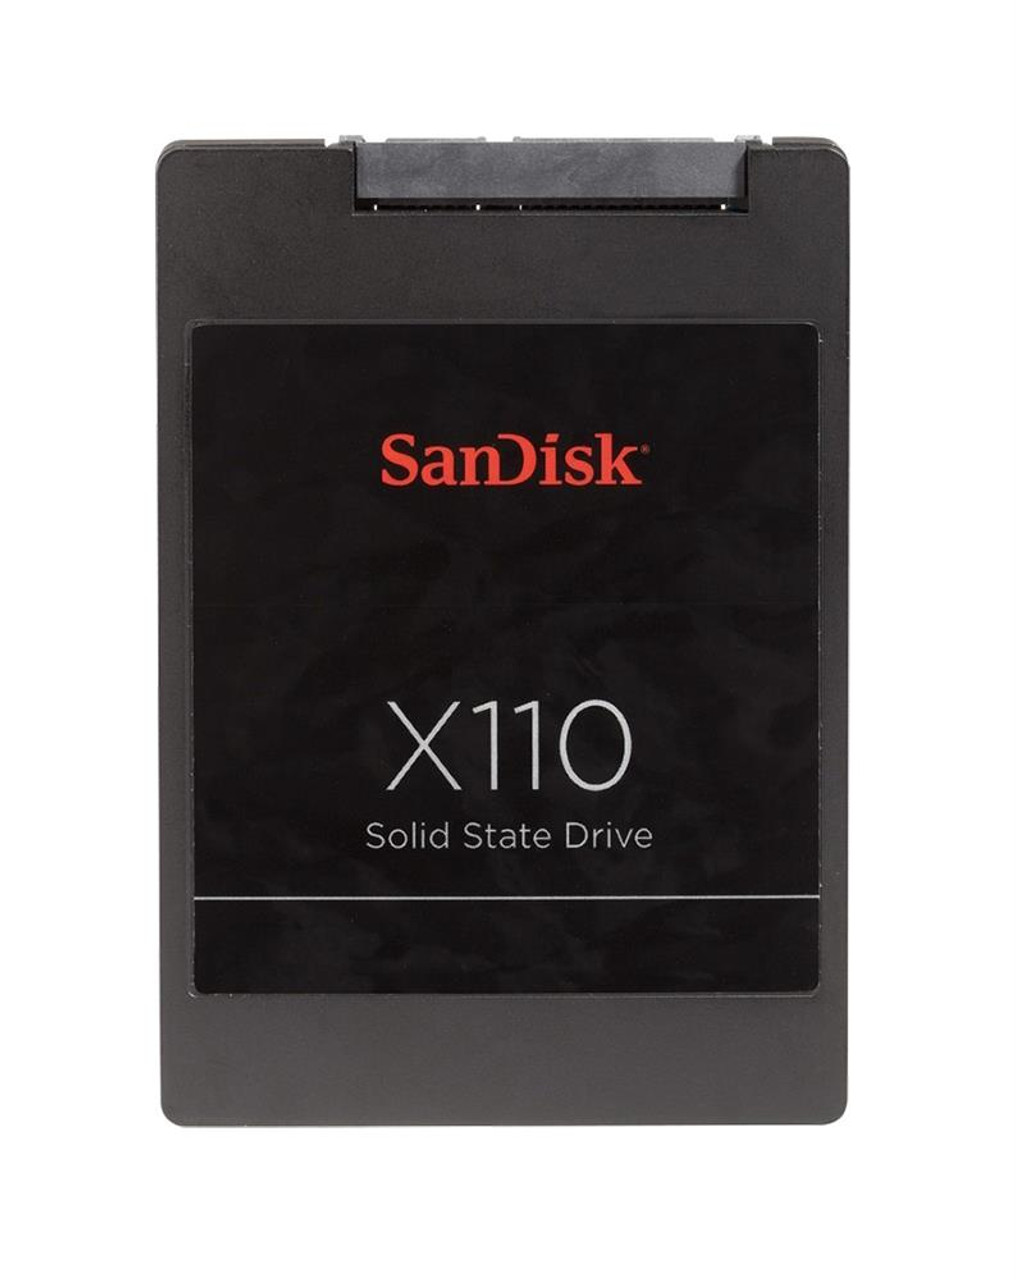 SD6SB1M-032G-1002I SanDisk X110 32GB MLC SATA 6Gbps 2.5-inch Internal Solid State Drive (SSD)